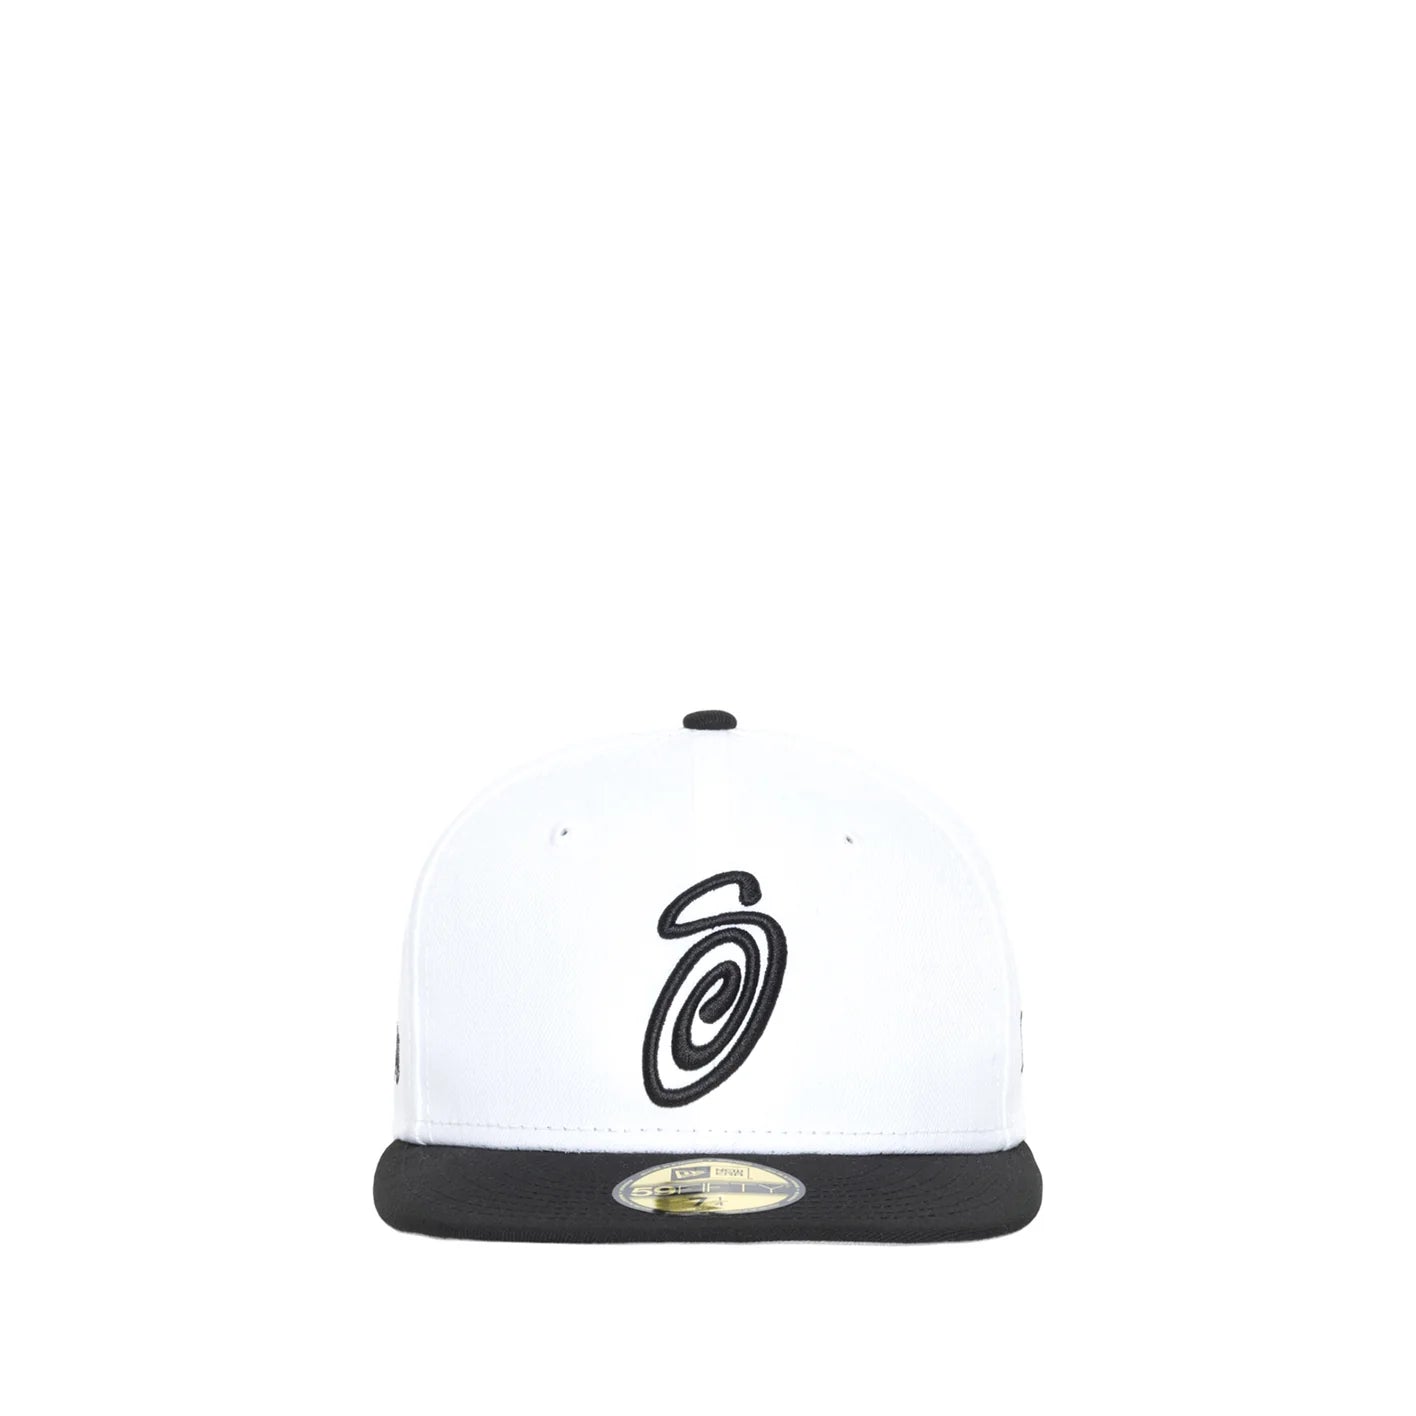 【激安買蔵】CURLY S 59FIFTY NEW ERA white black 帽子